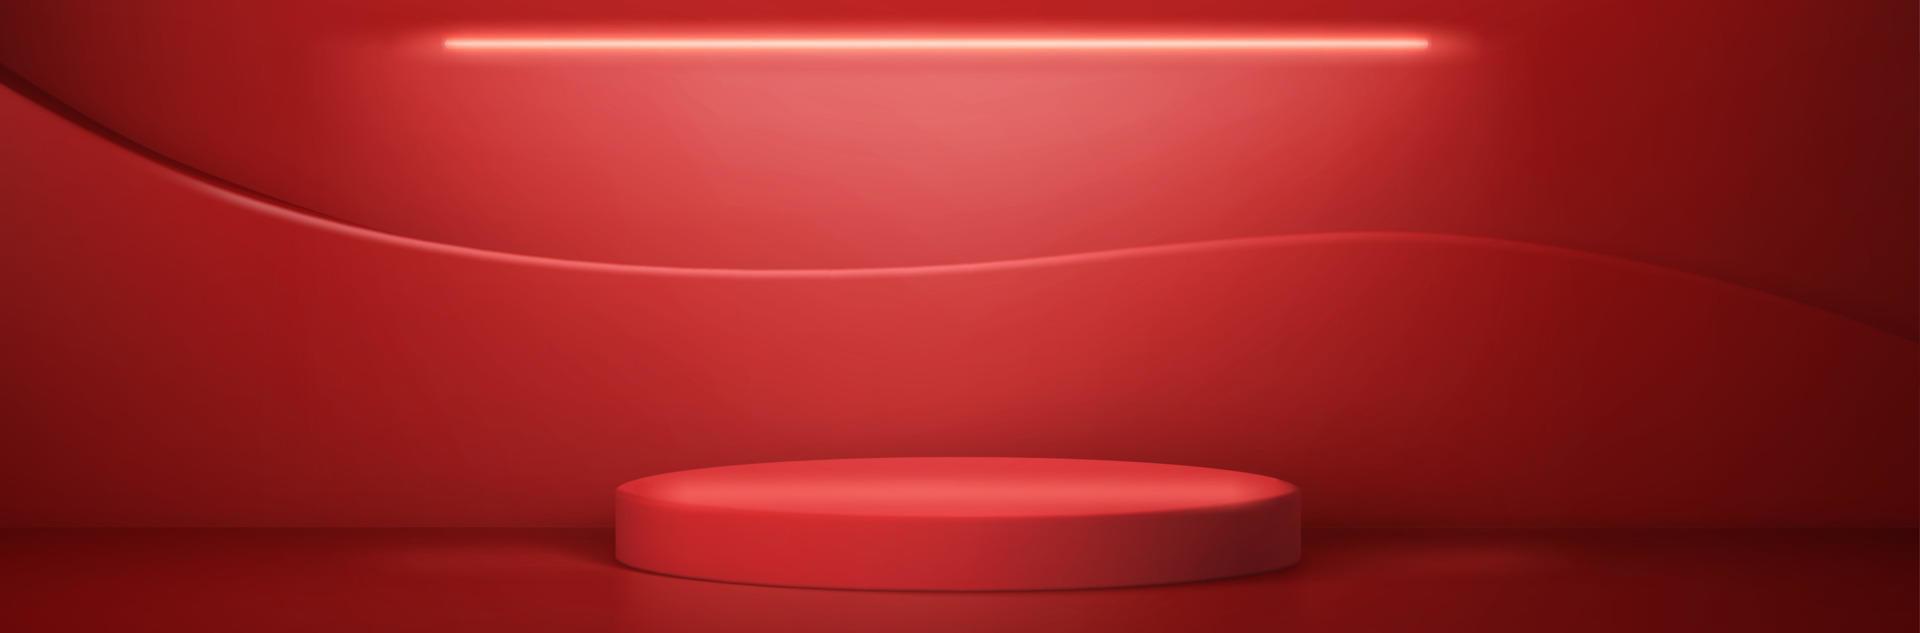 rood ronde podium, platform of stadium vector